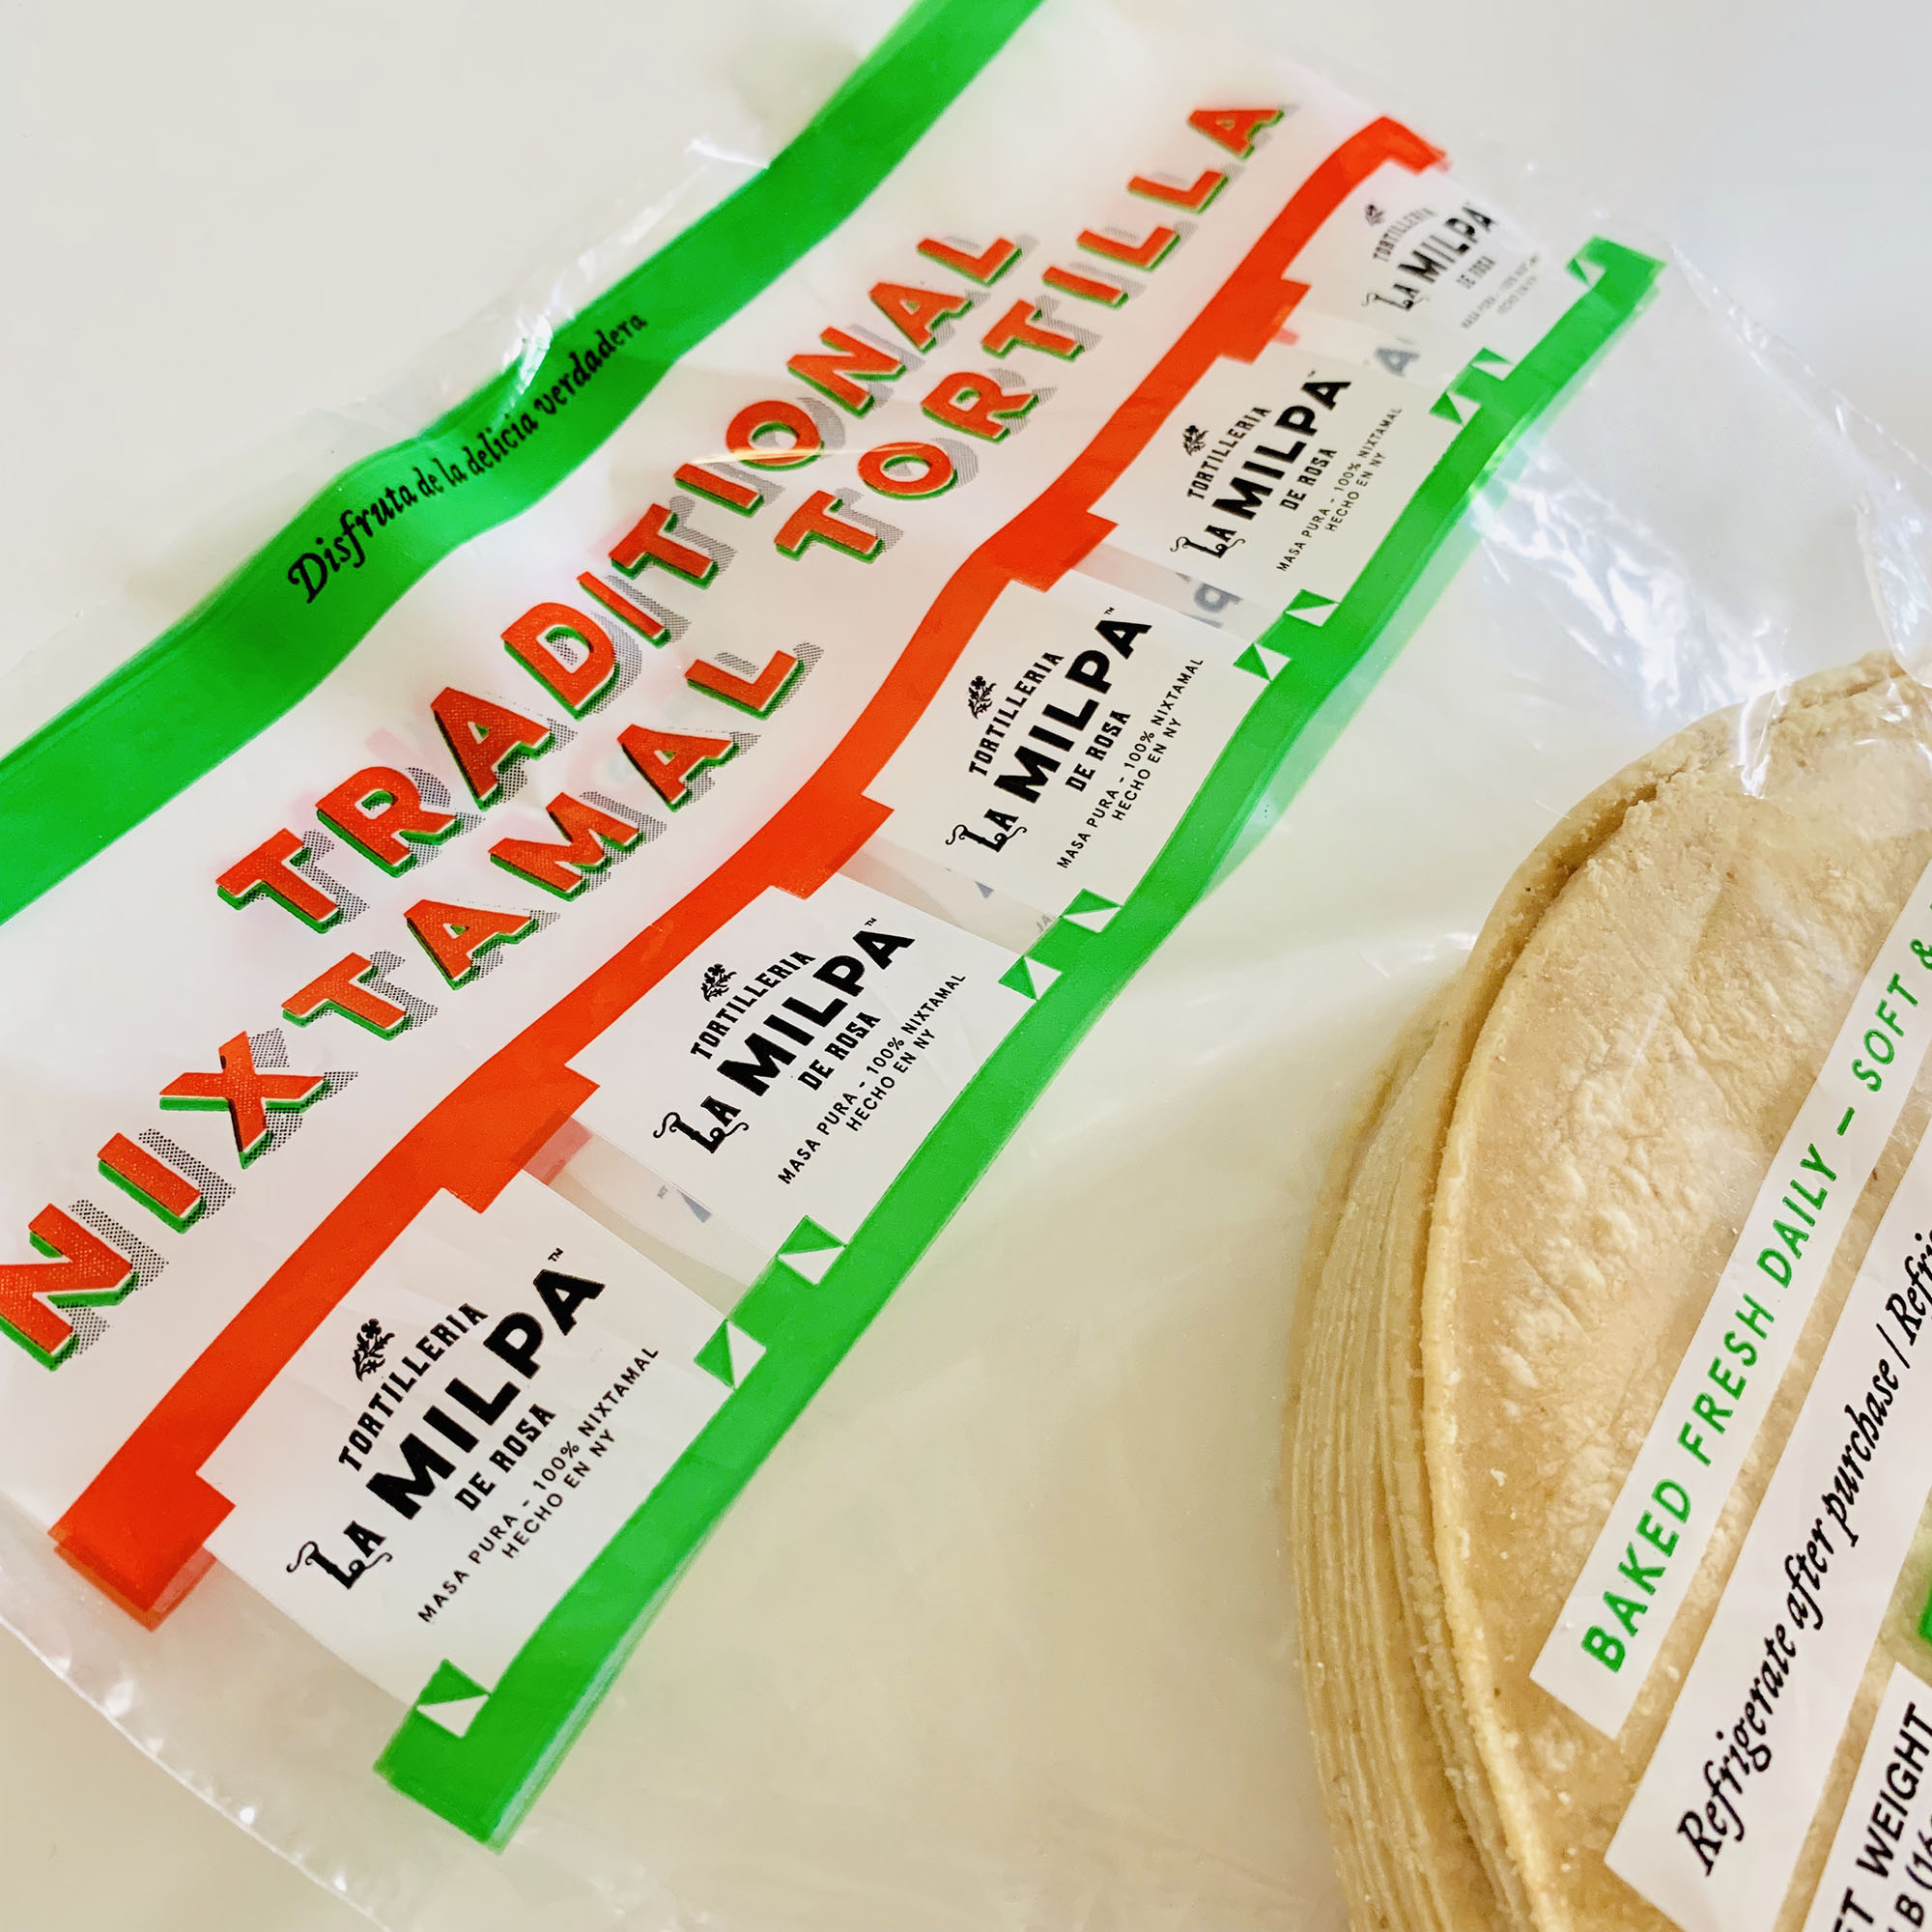 The Best Traditional Nixtamal Tortillas are La Milpa Tortillas